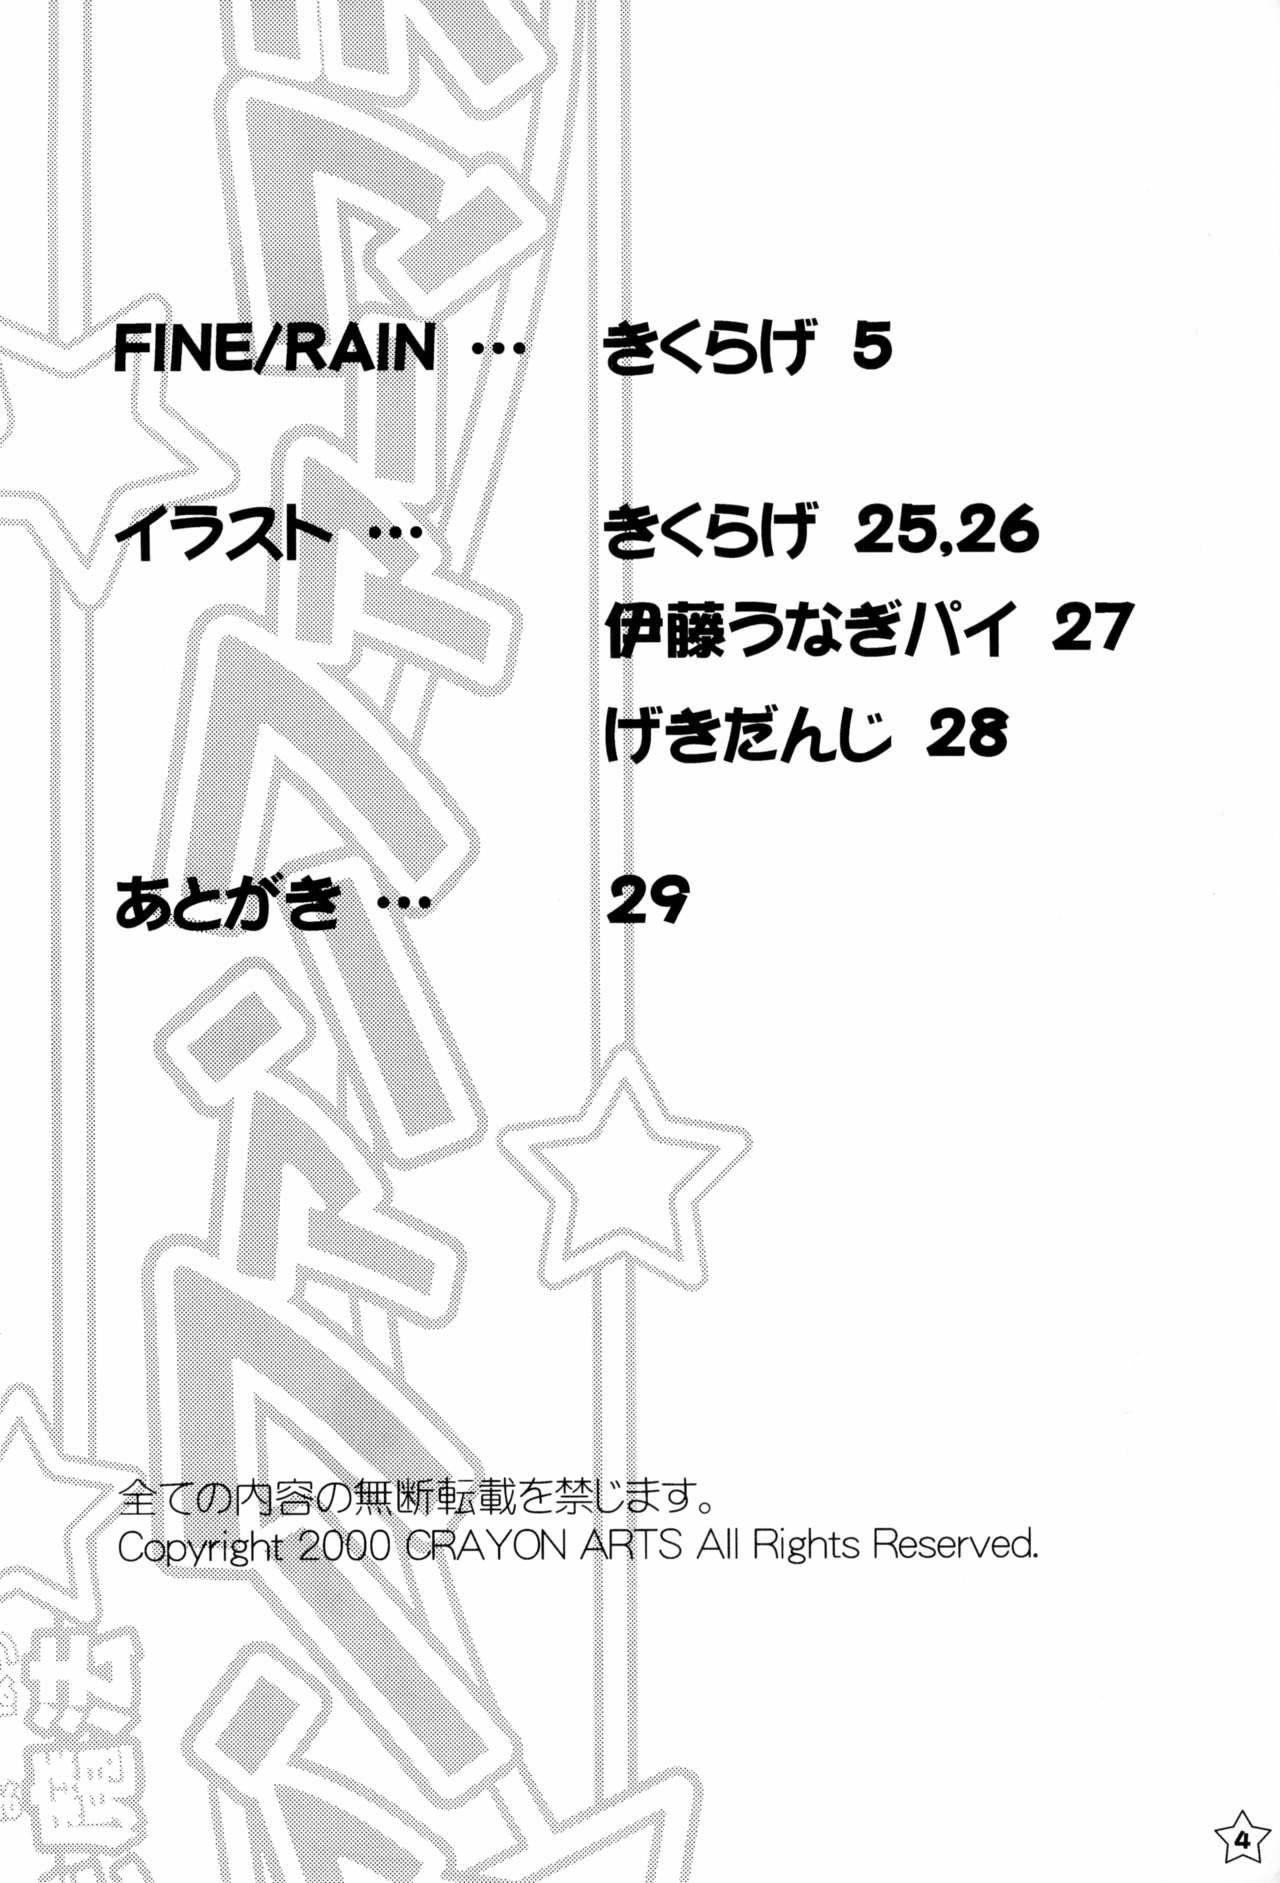 Fine/Rain 3